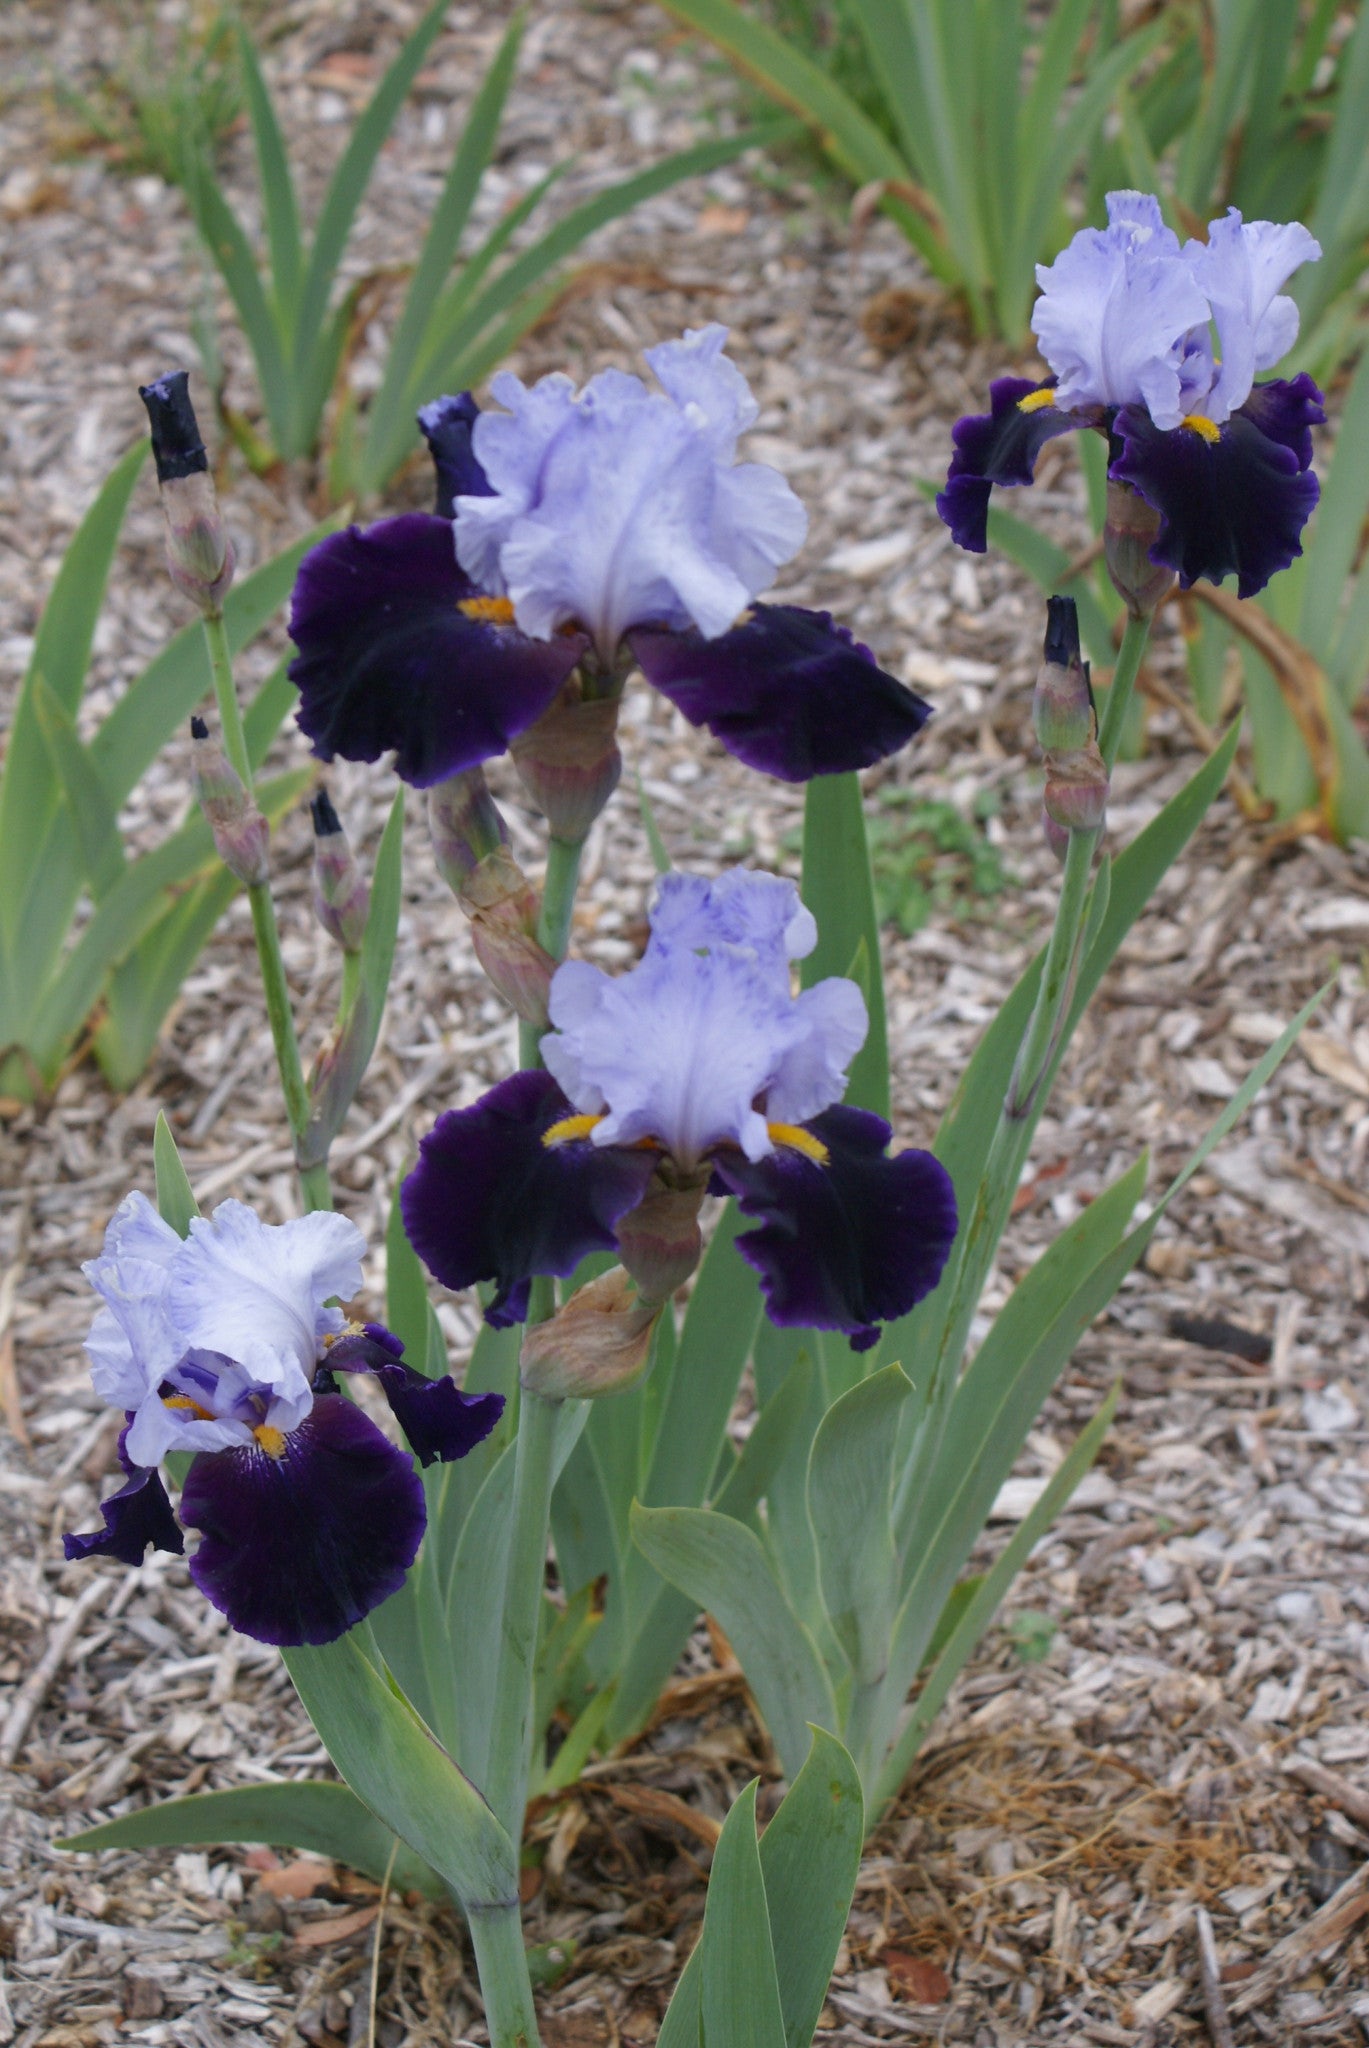 Habit - Tall Bearded Iris